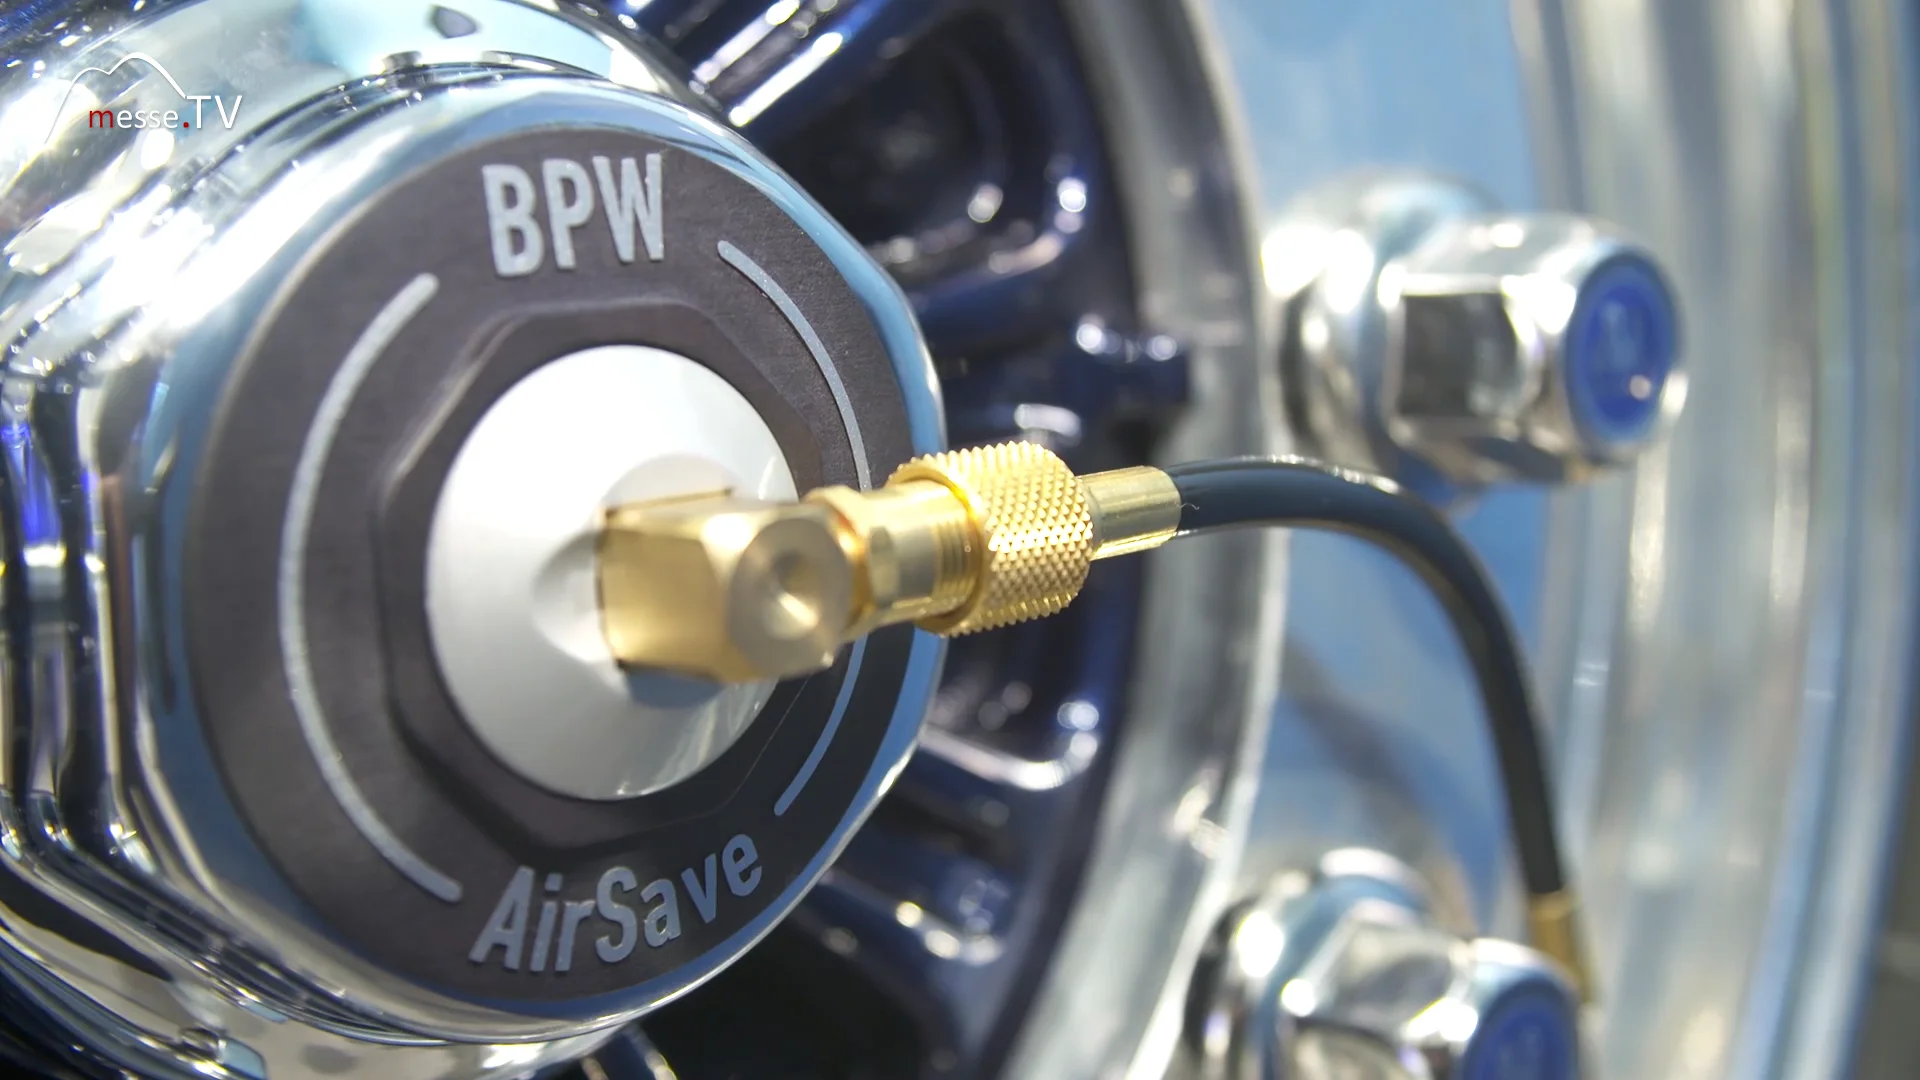 BPW: AirSafe Reifendruckregelung on Vimeo